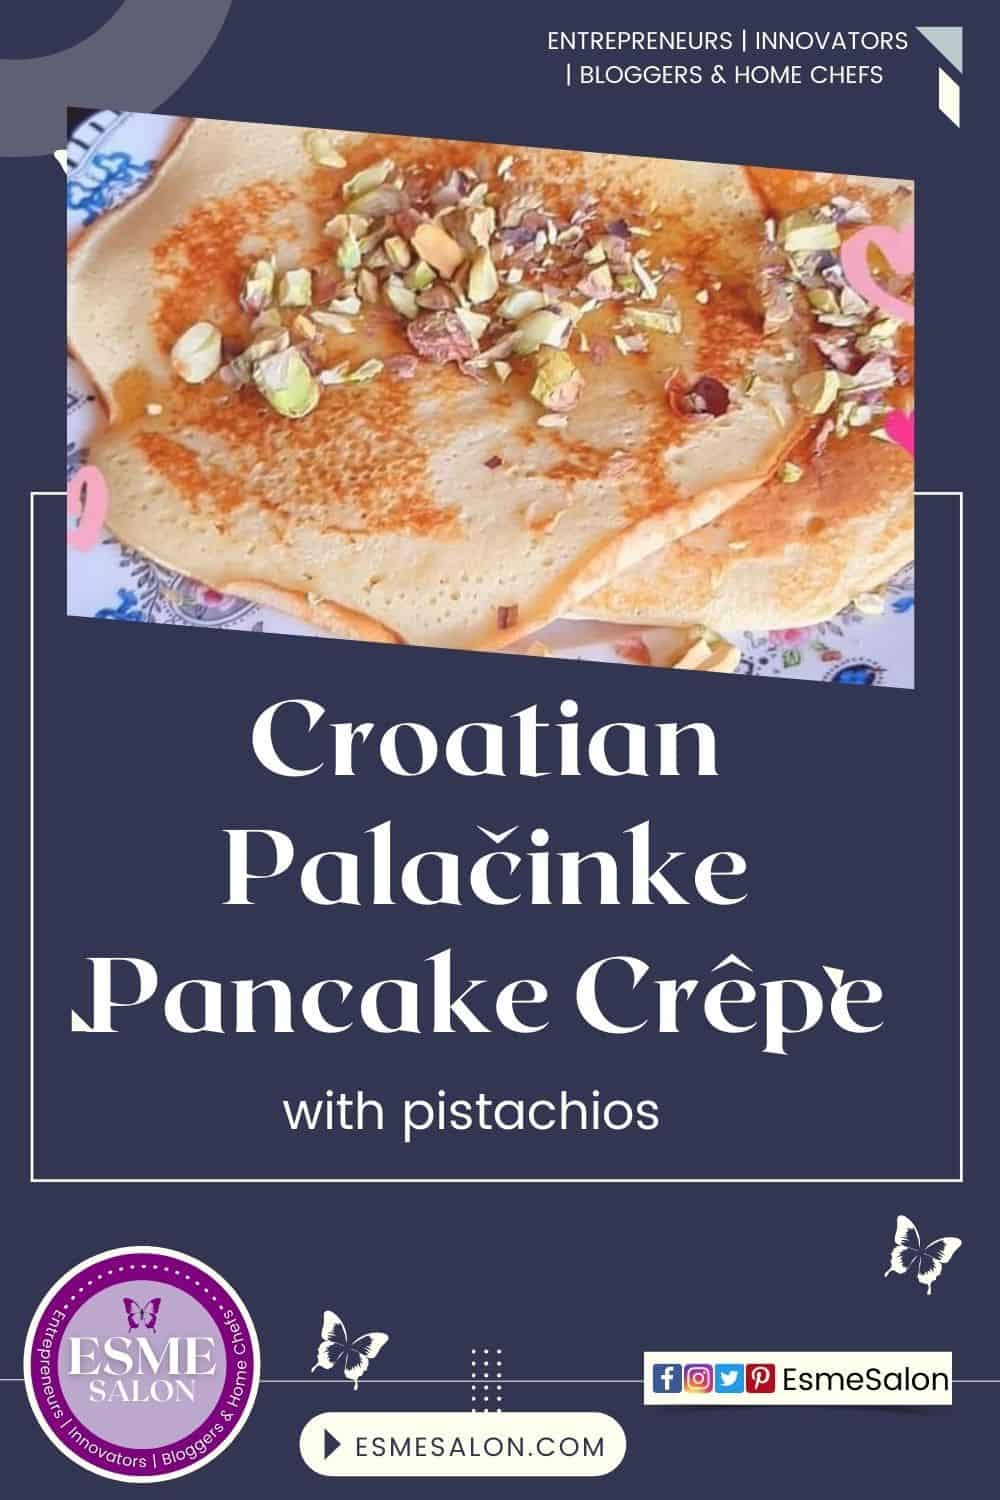 An image of a pile of Croatian Palačinke Pancake Crêpe topped with pistachios